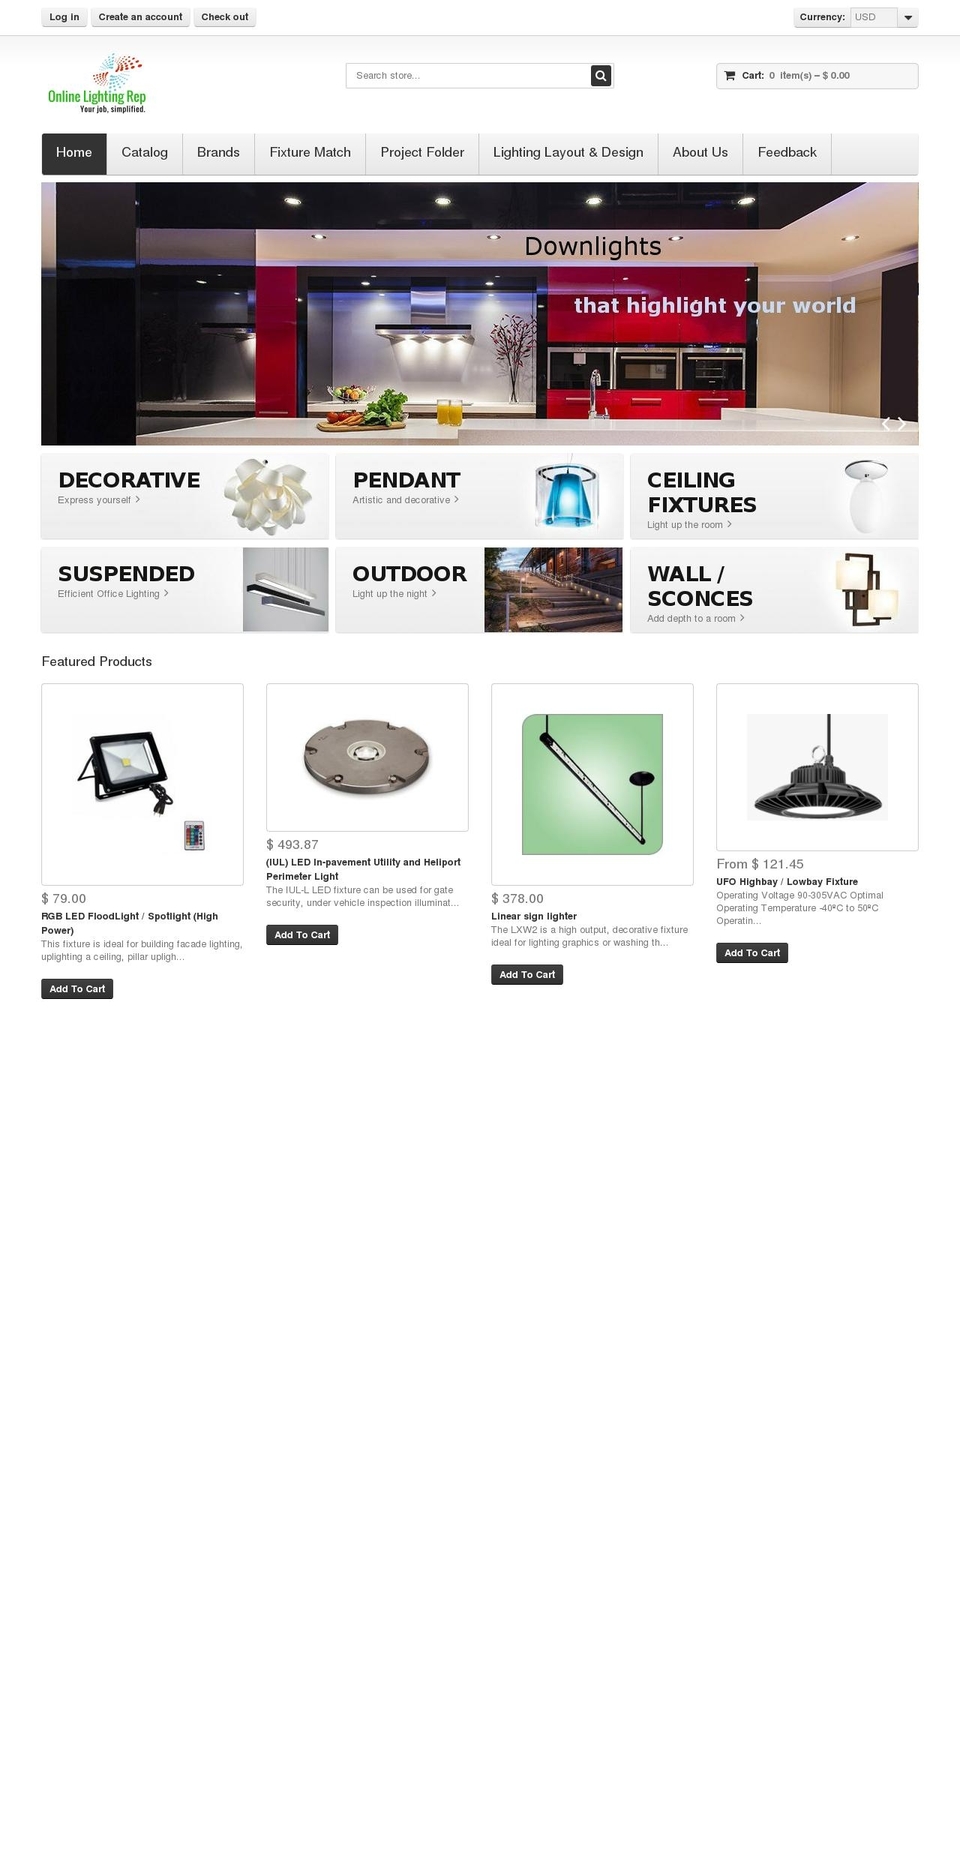 dealer.lighting shopify website screenshot